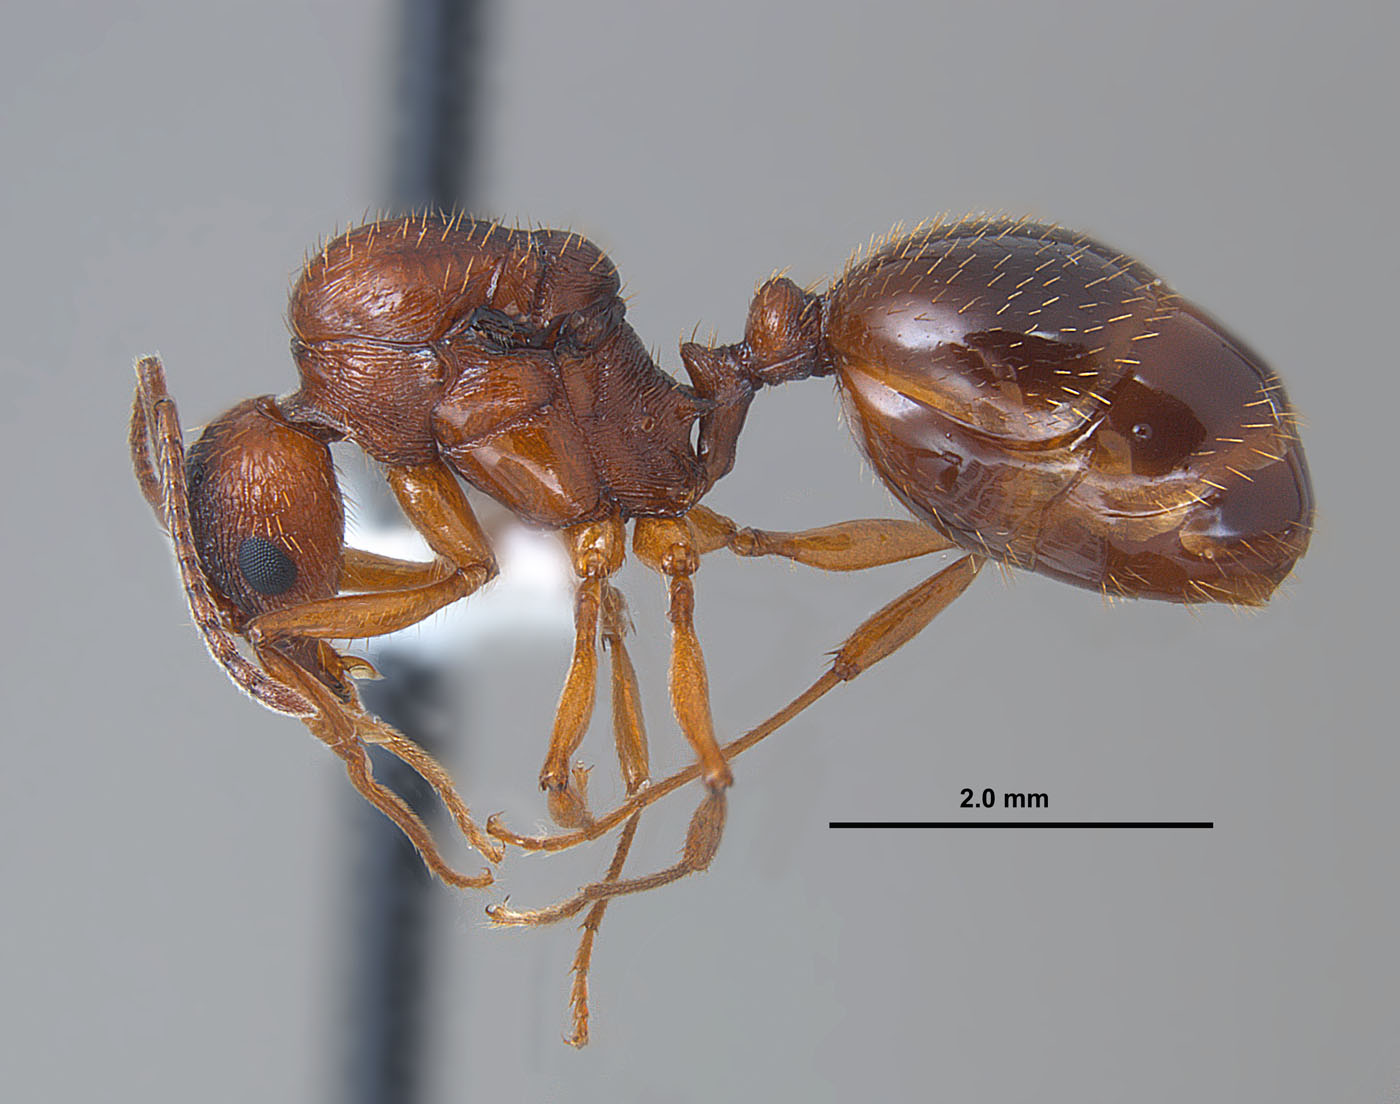 Aphaenogaster carolinensis queen side